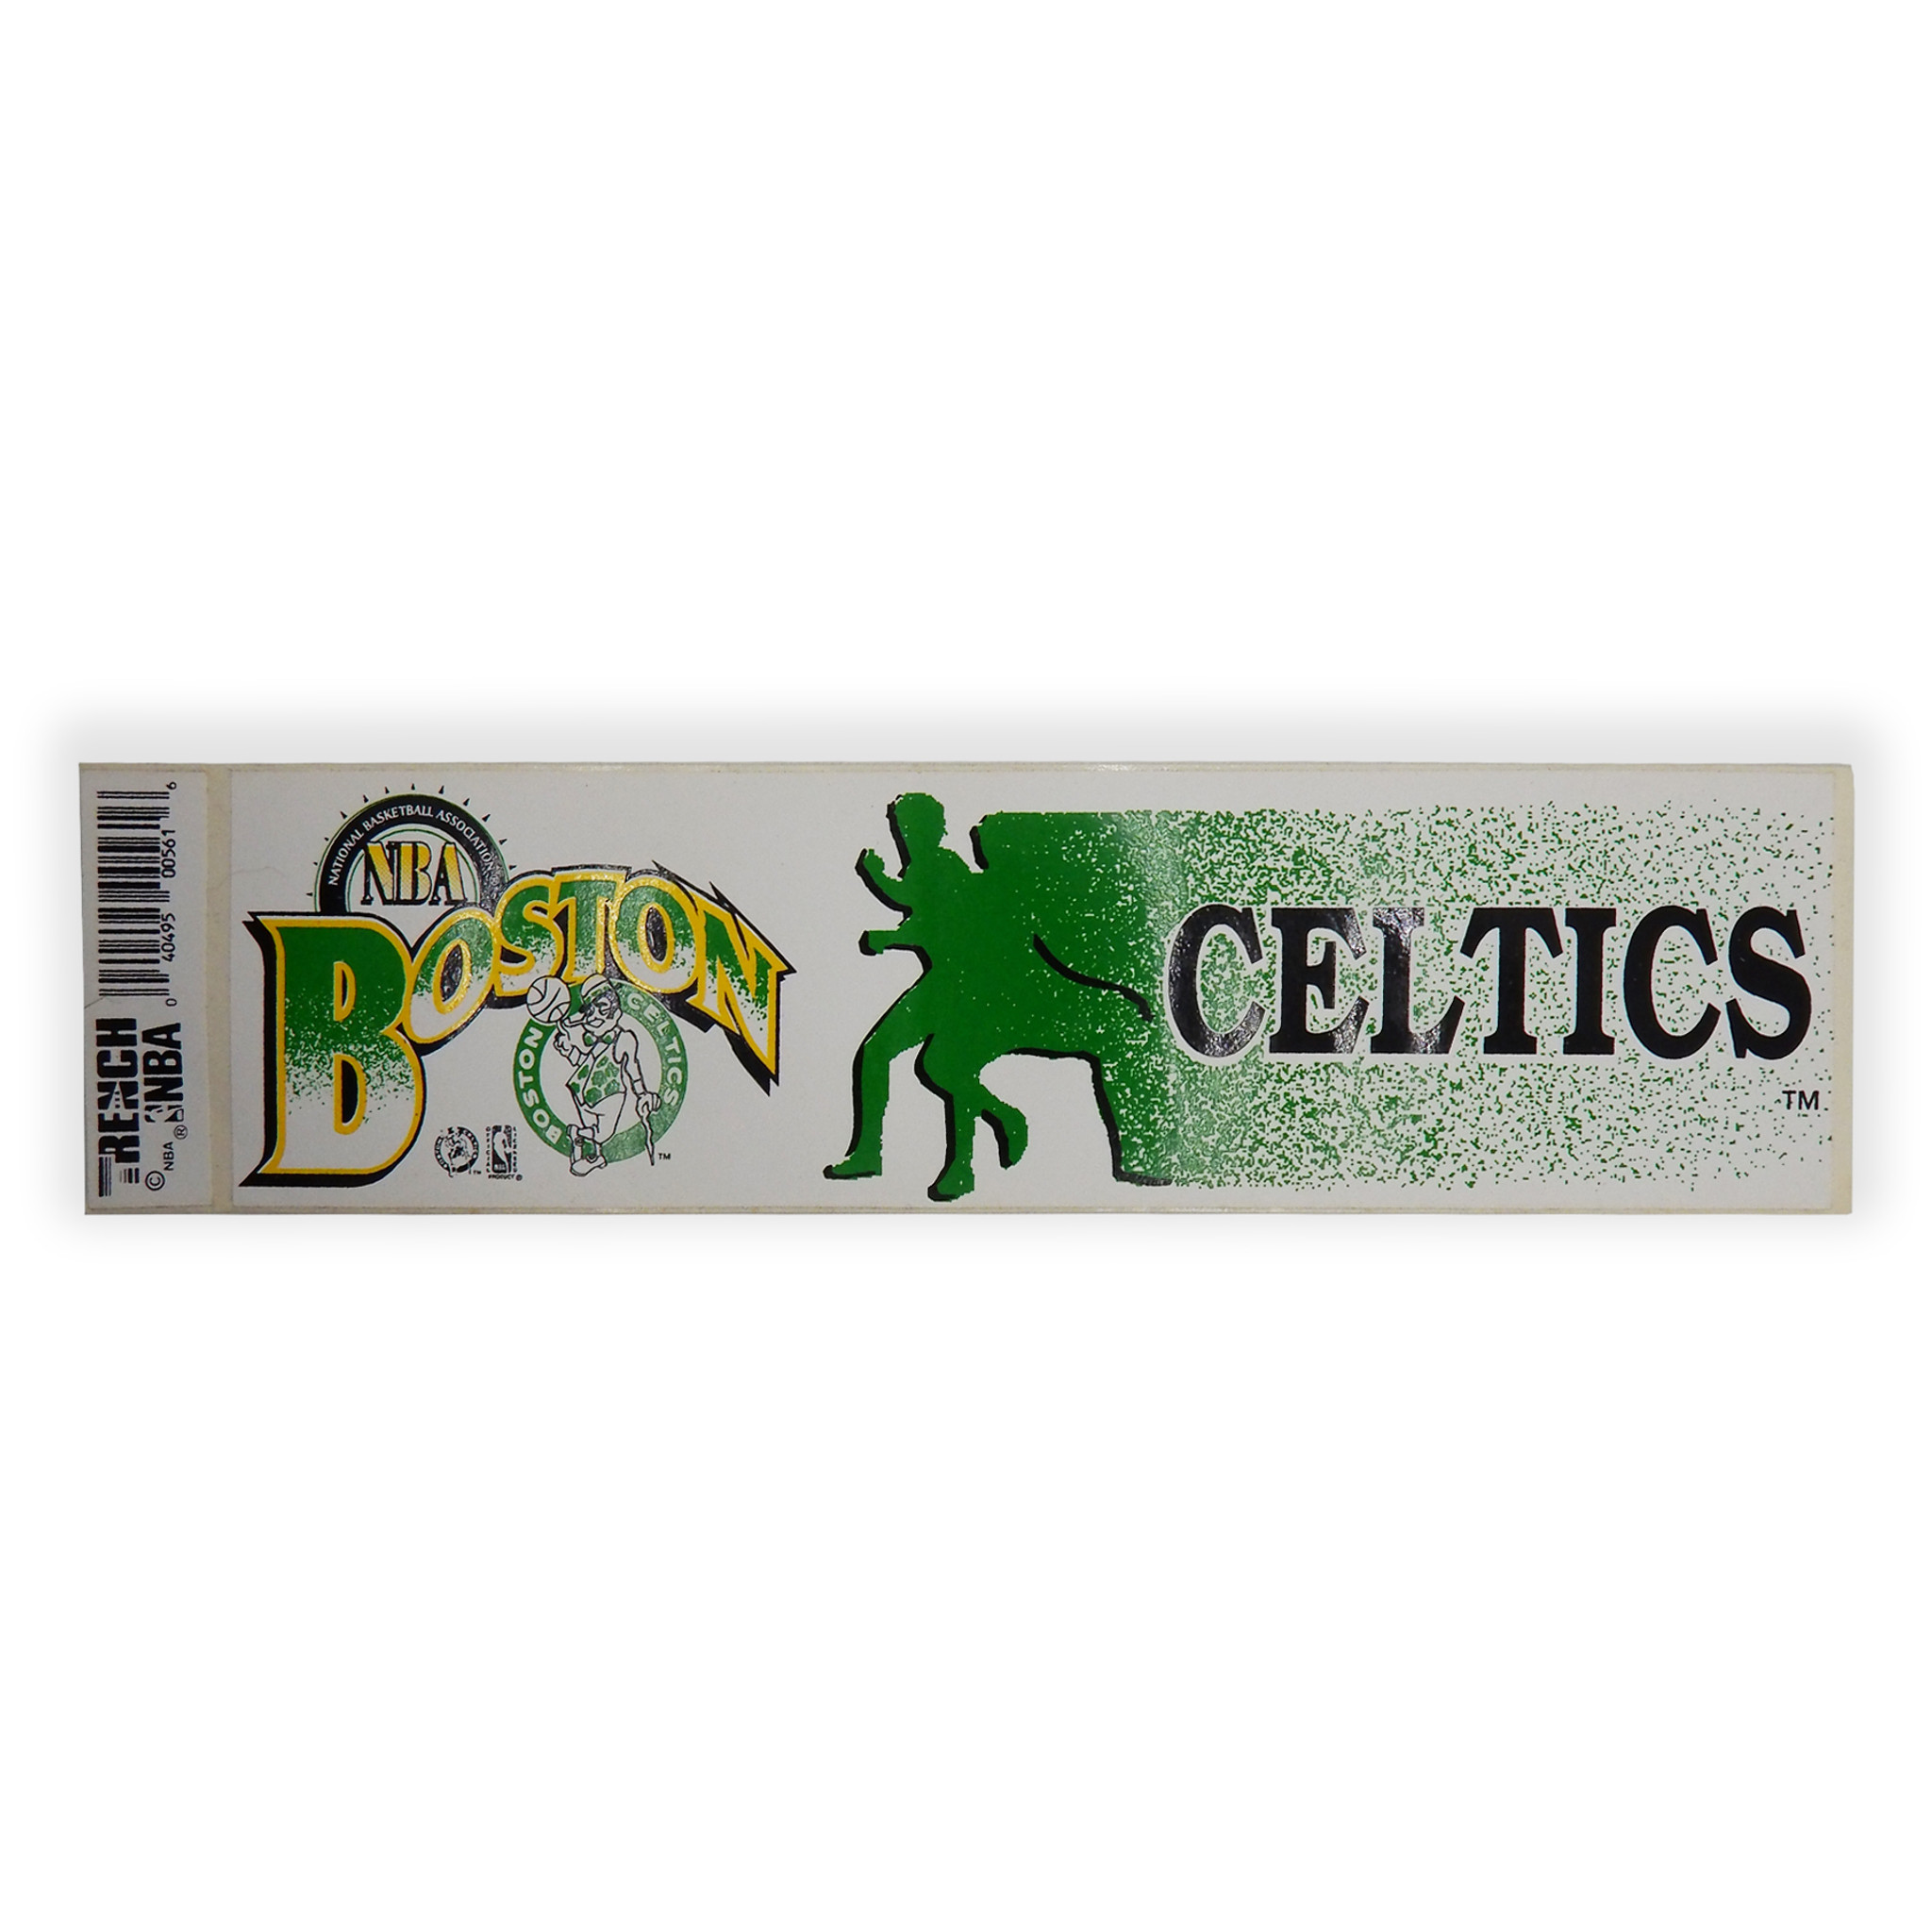  Vintage Celtics Bumper Sticker